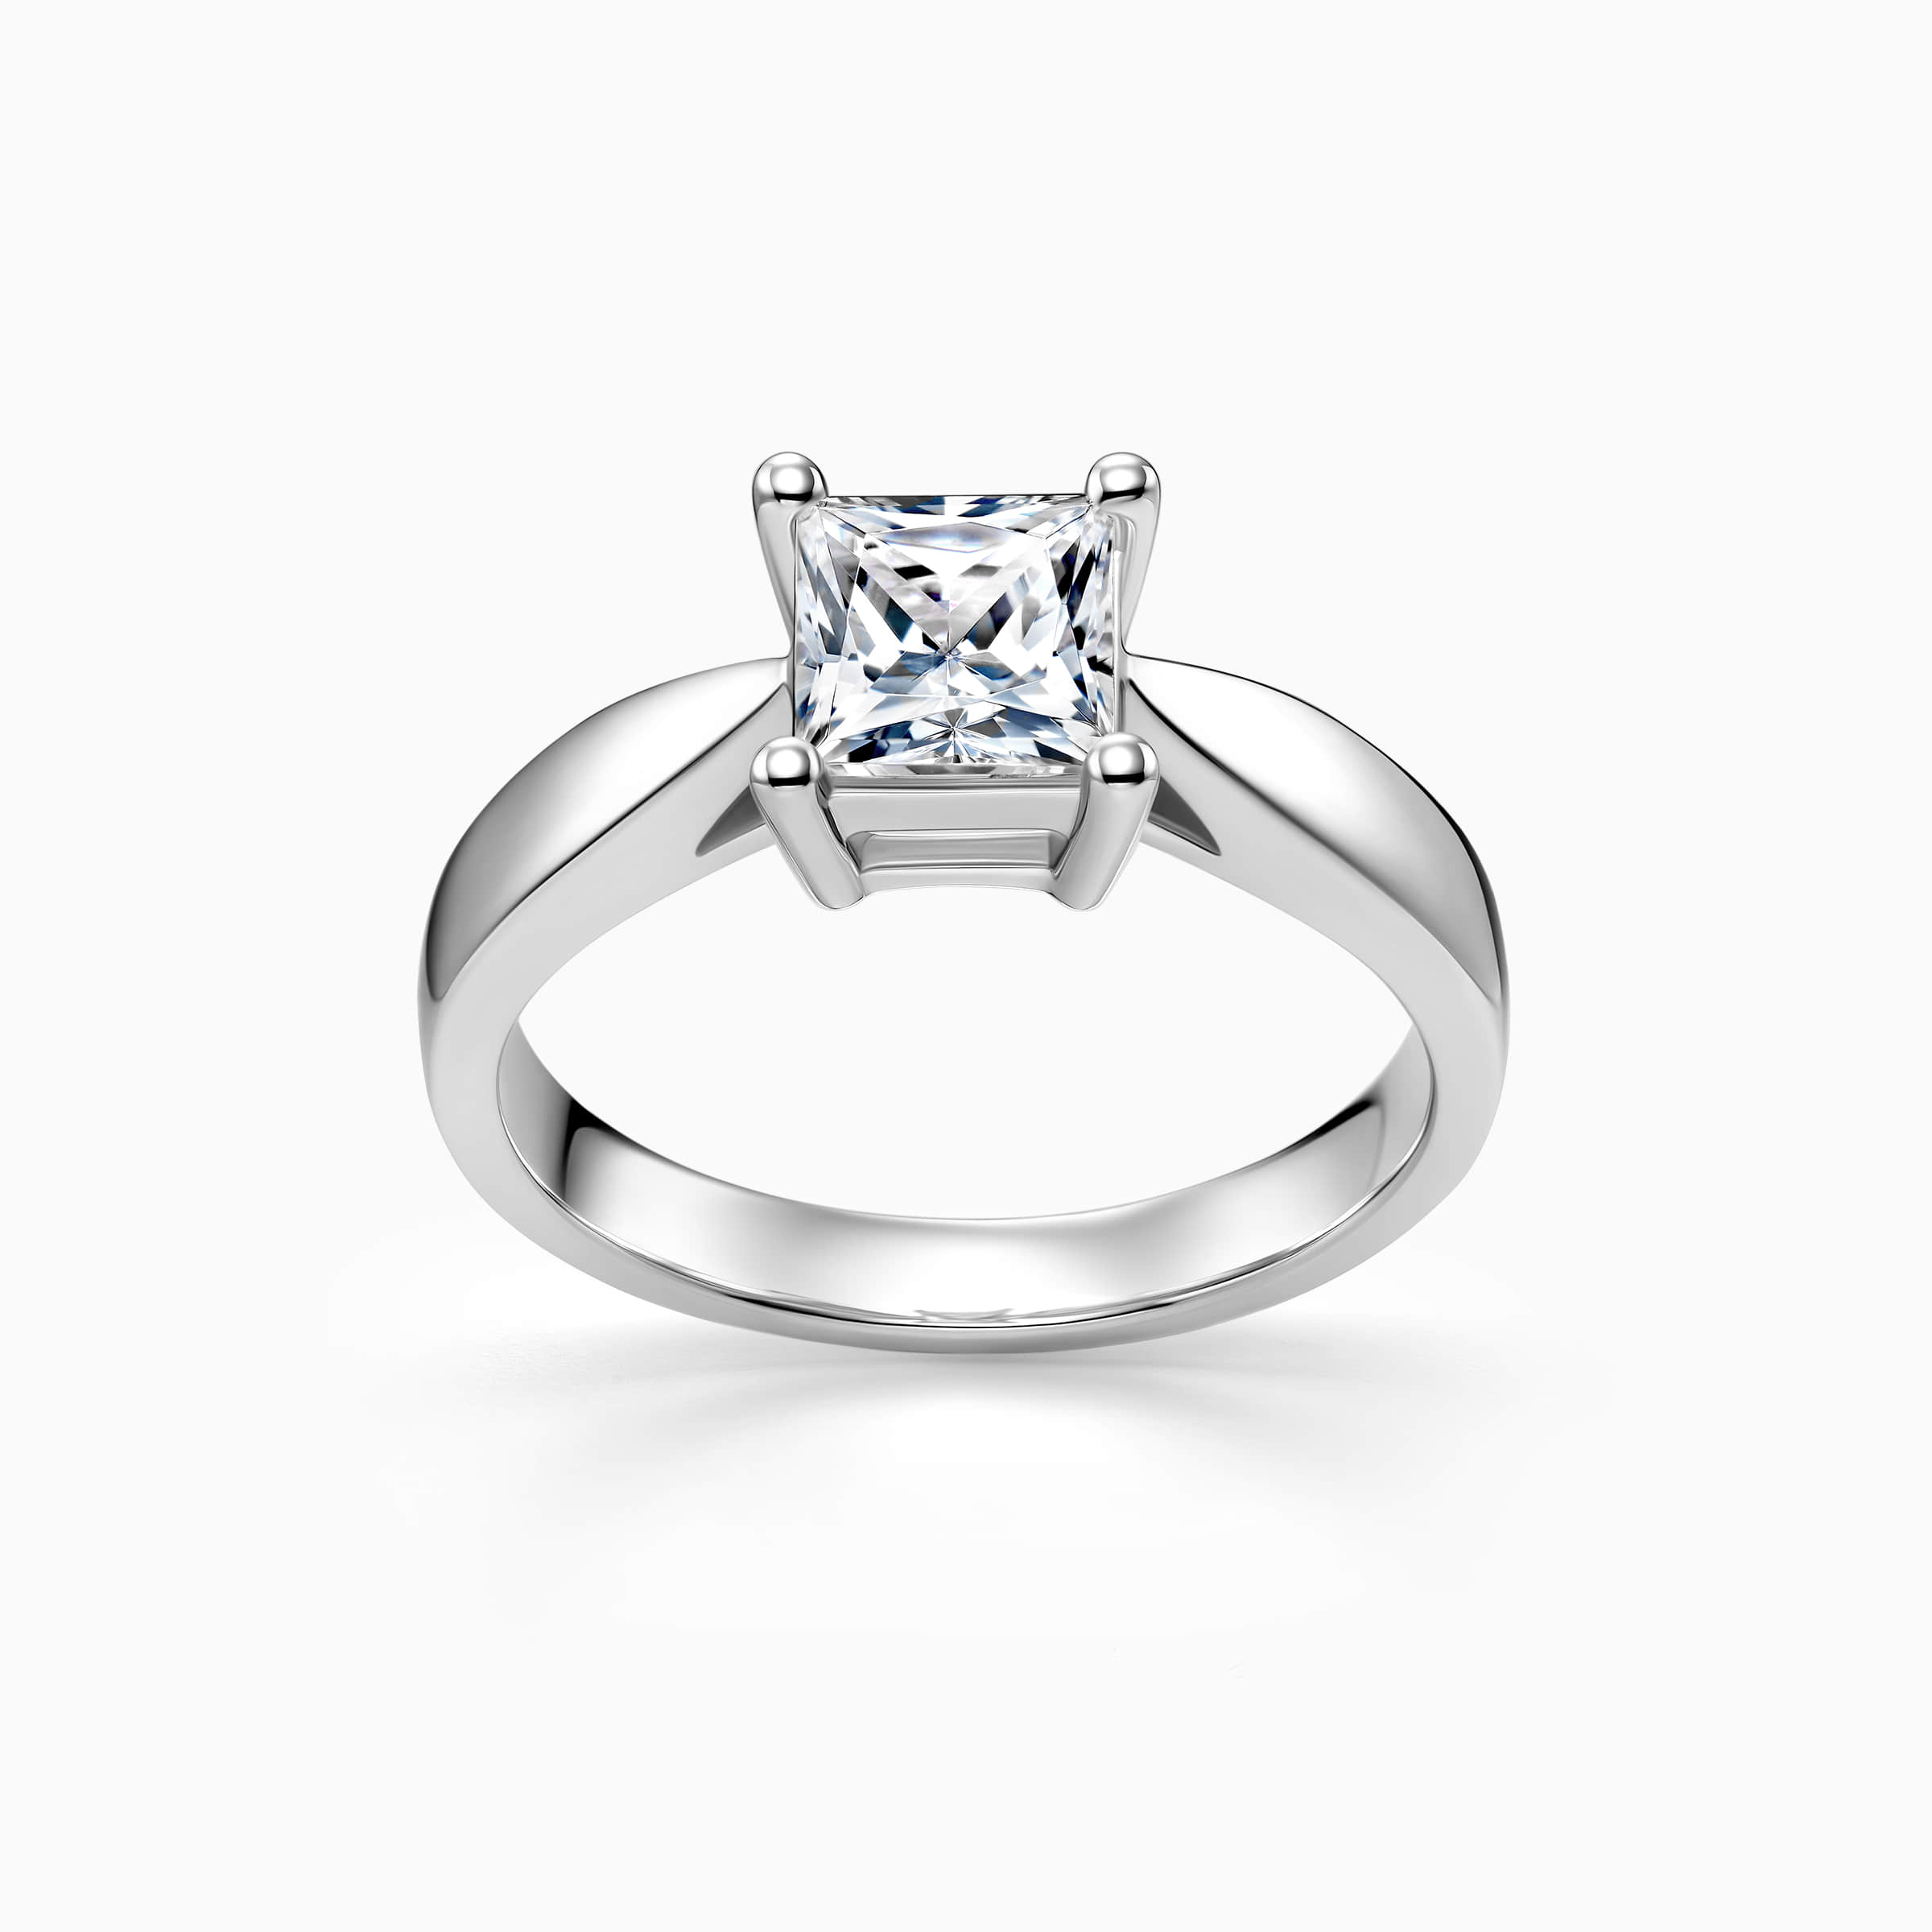 darry ring princess cut diamond engagement ring top view